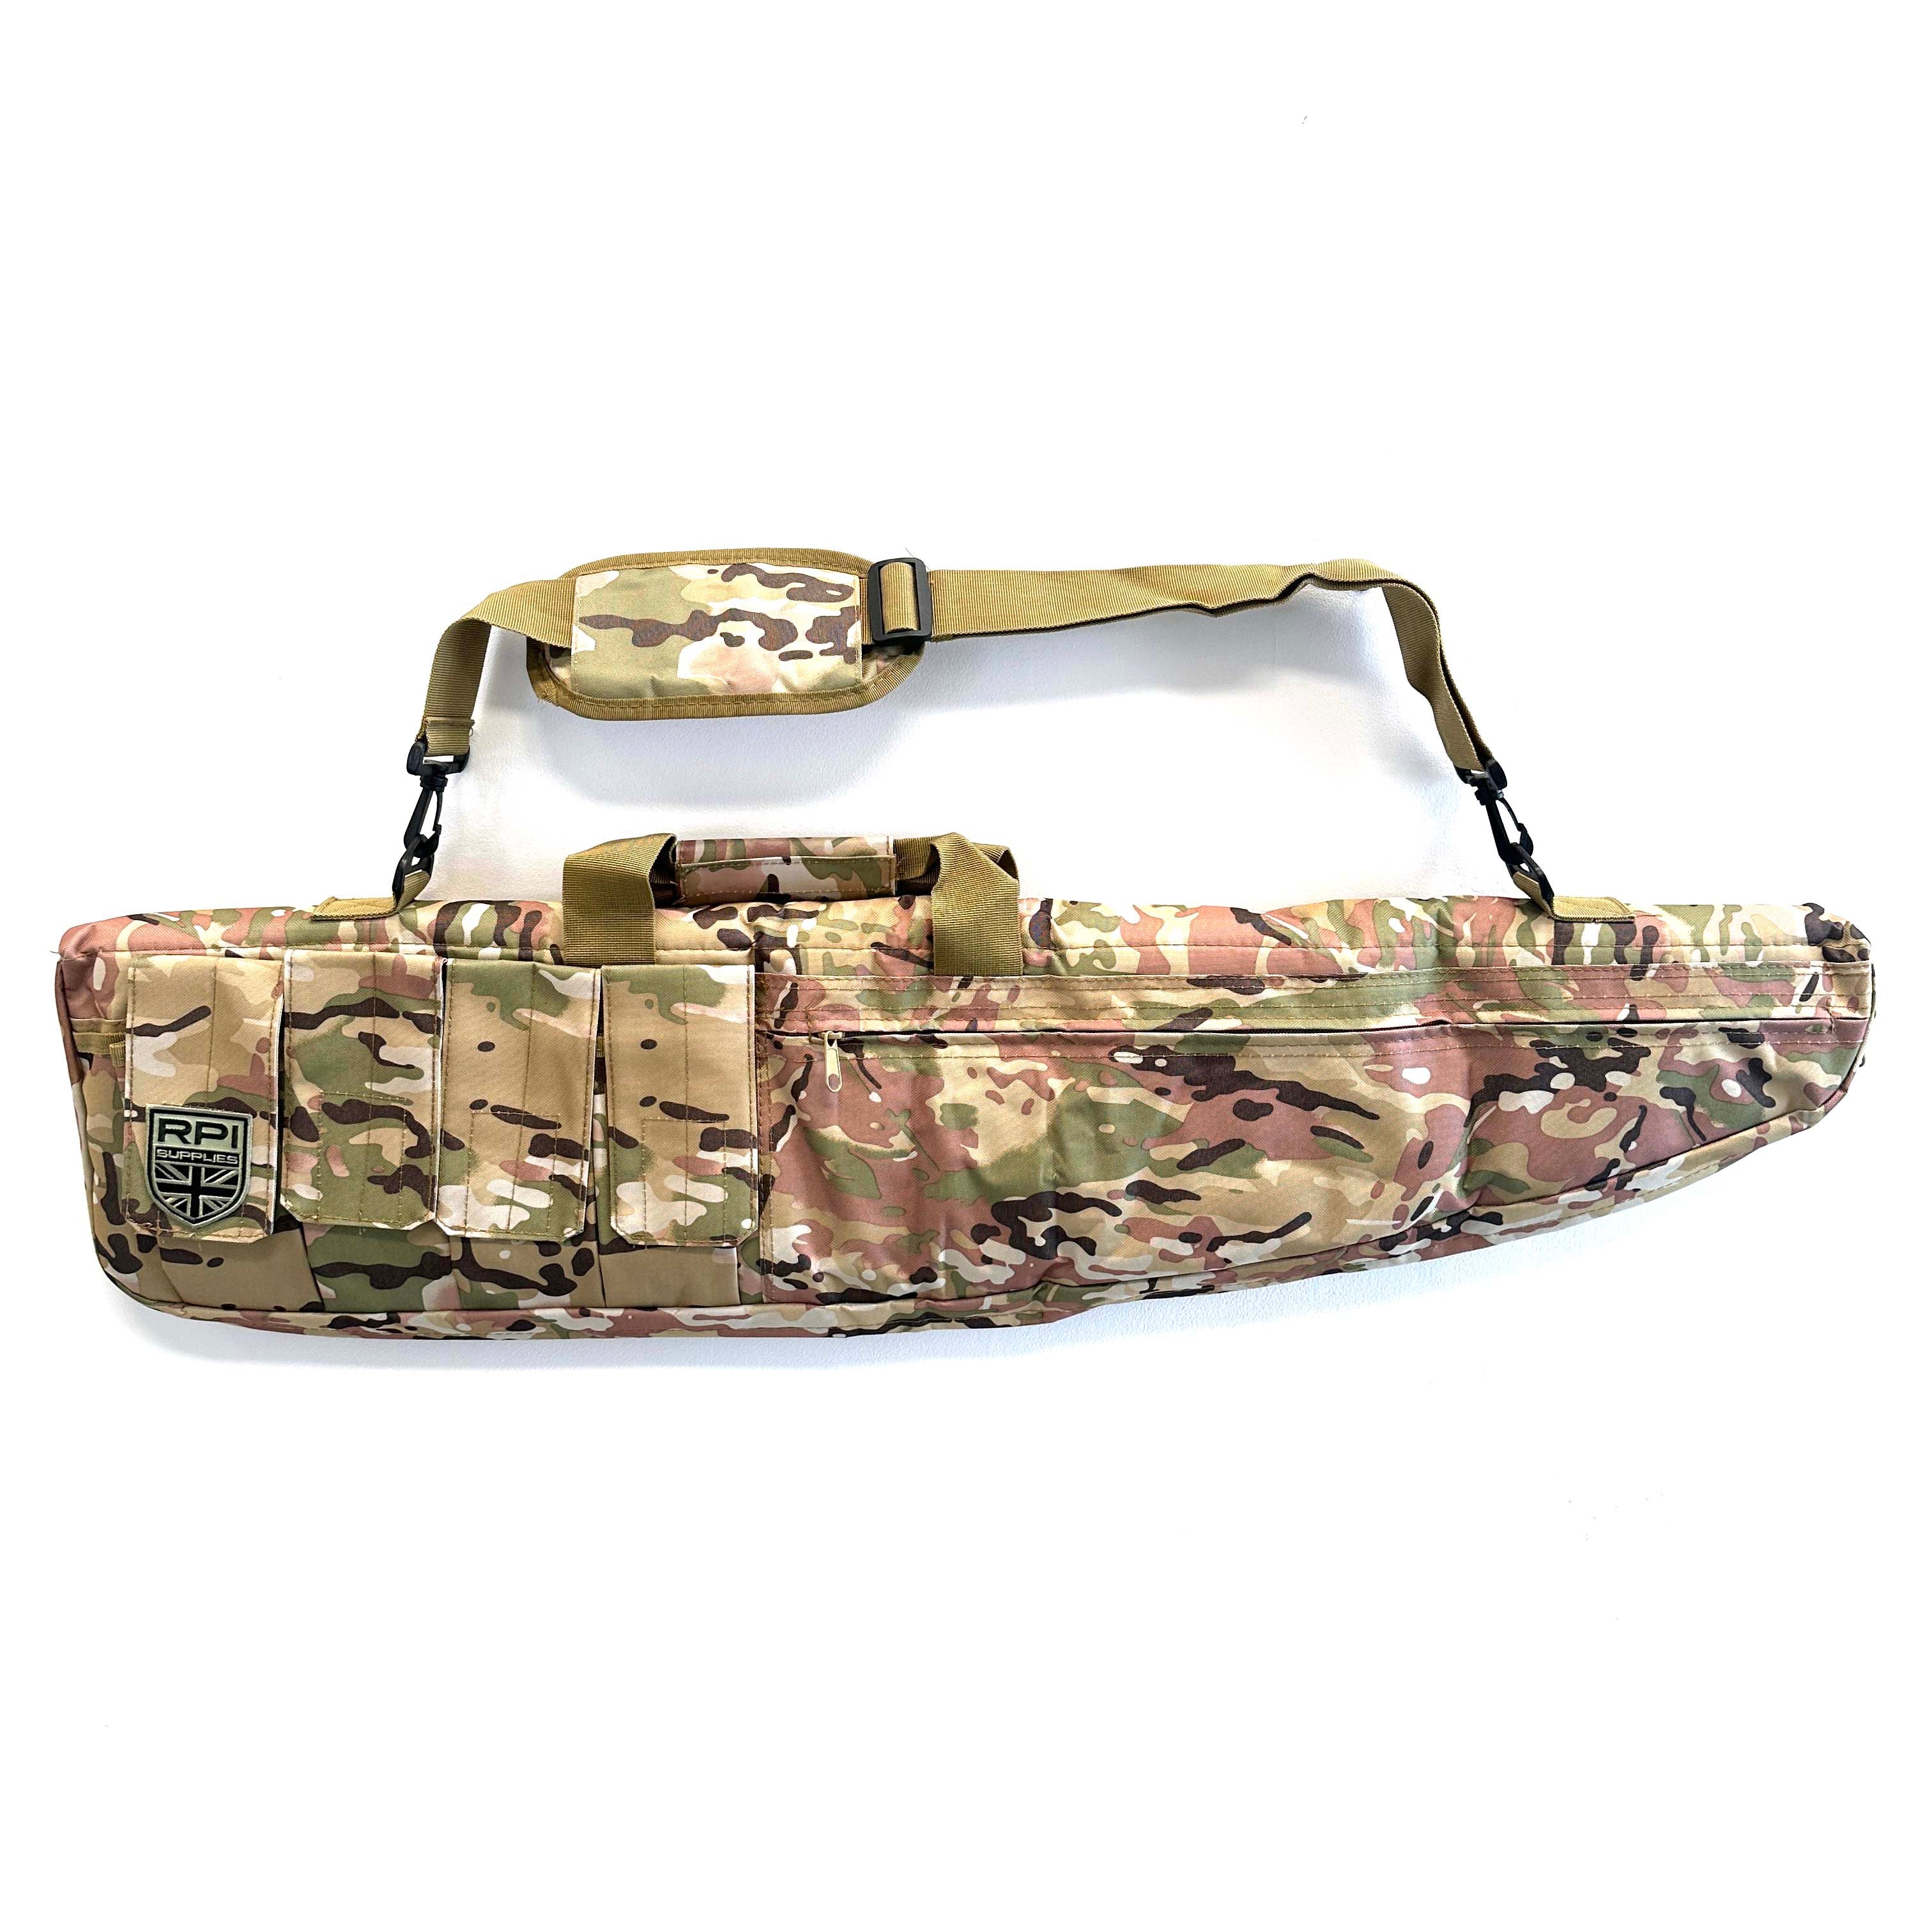 1 Meter Gun Bag - CP Camo - Brand new - RPI Supplies